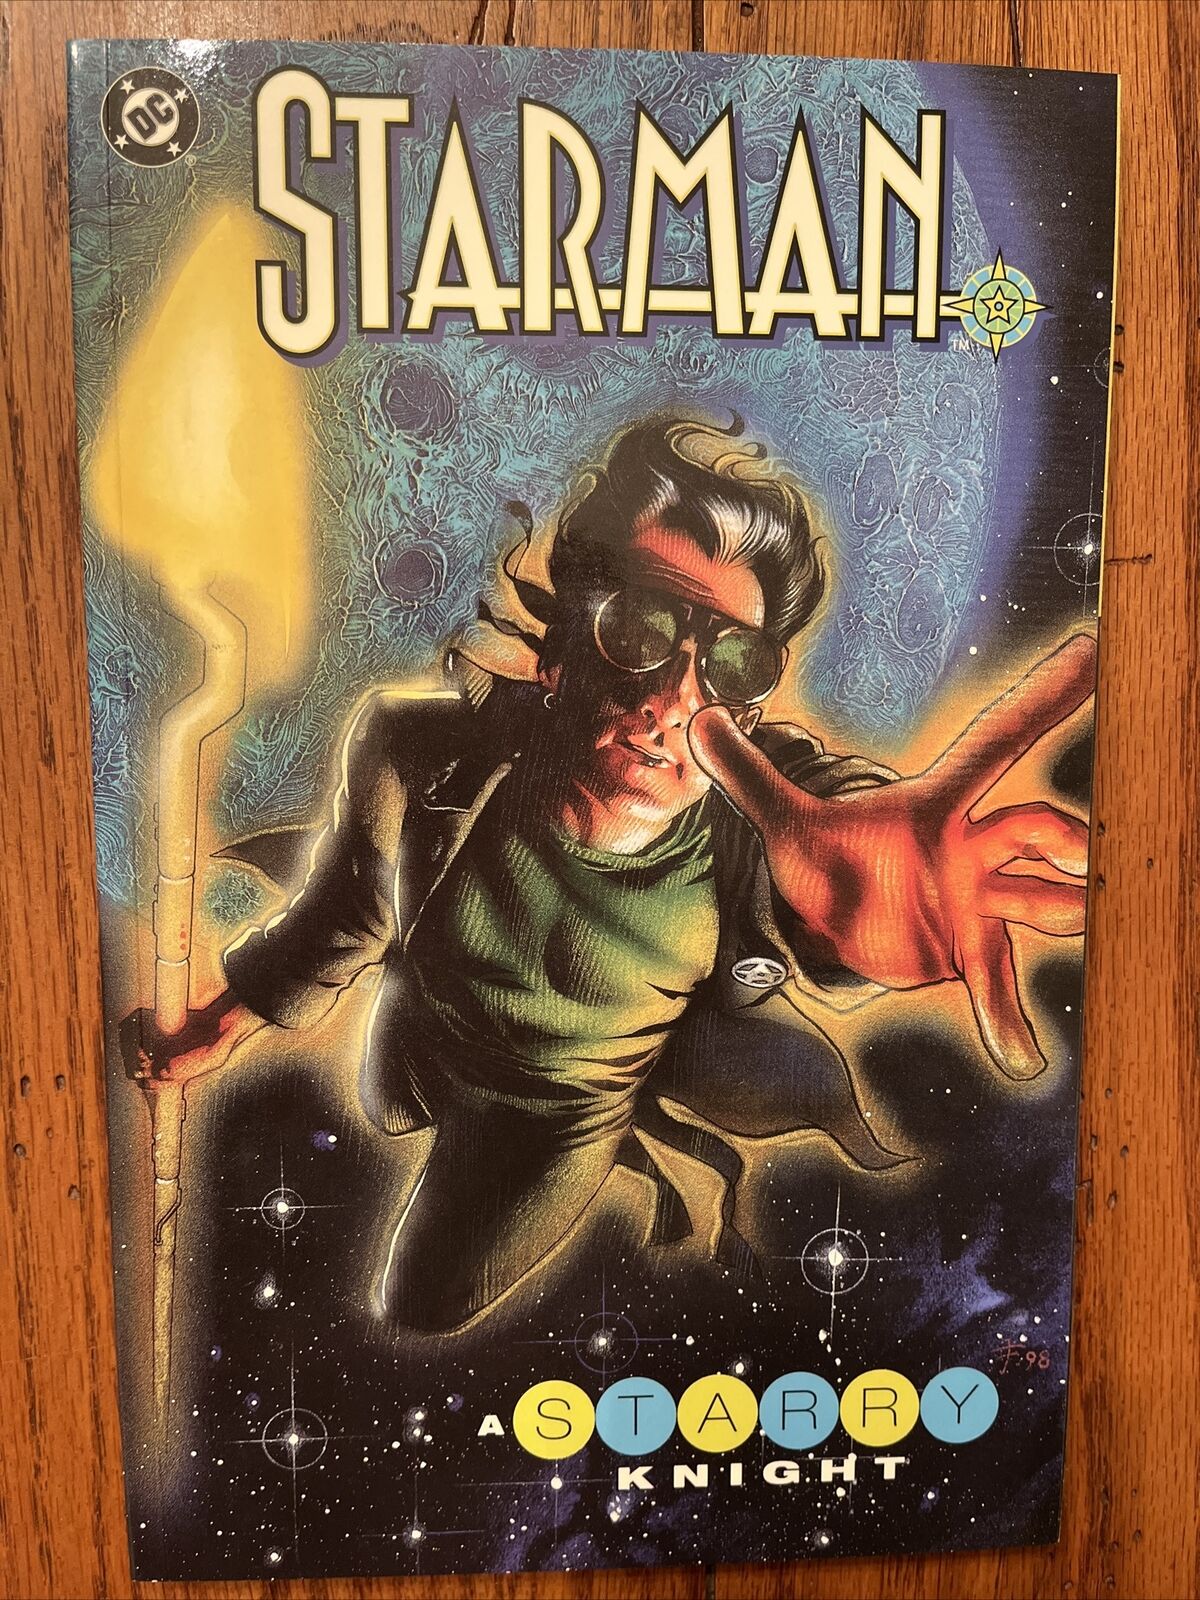 Starman-A Starry Knight (1999) DC TPB By Robinson, New. FF